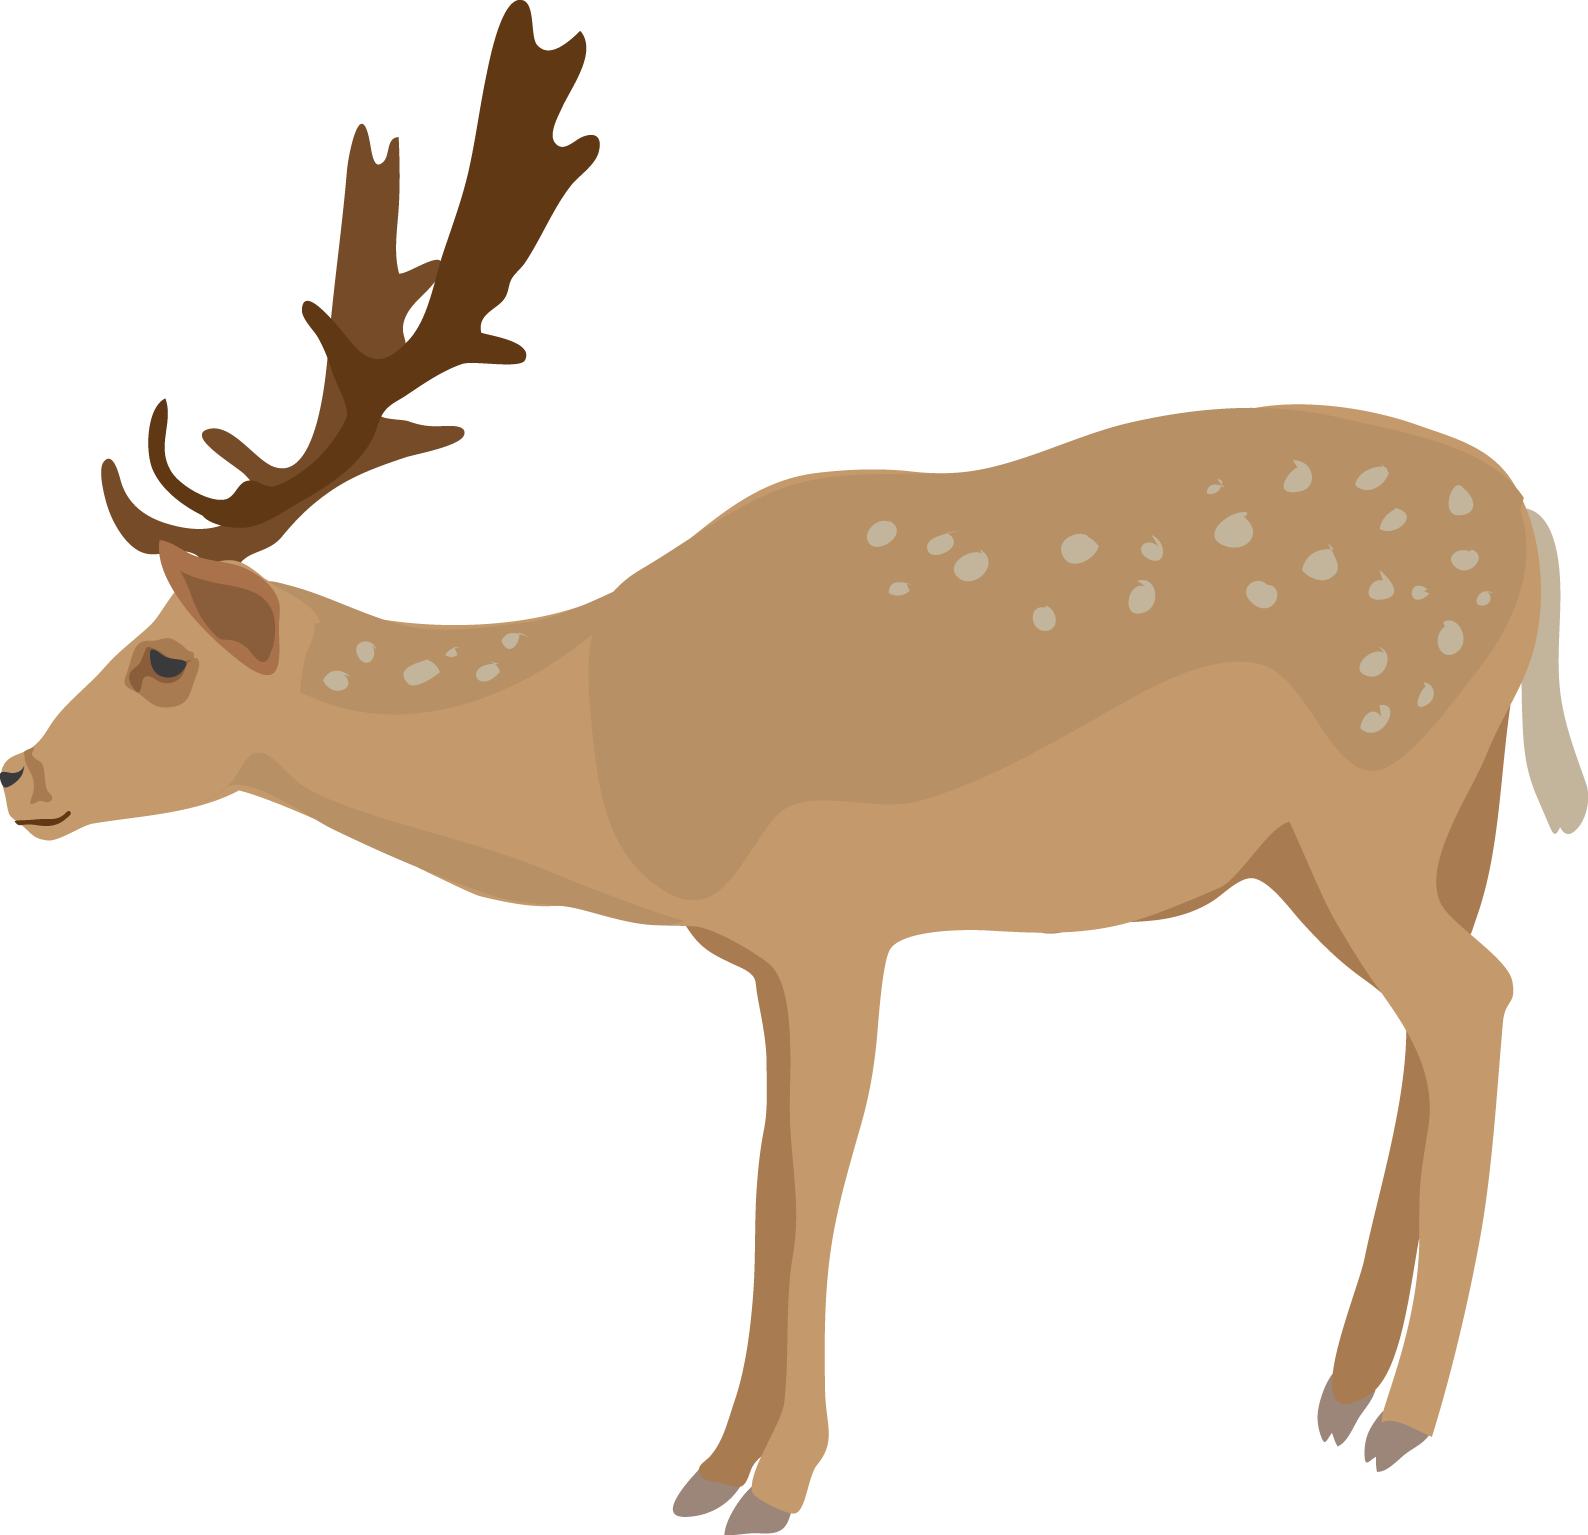  collection of deer. Elk clipart simple